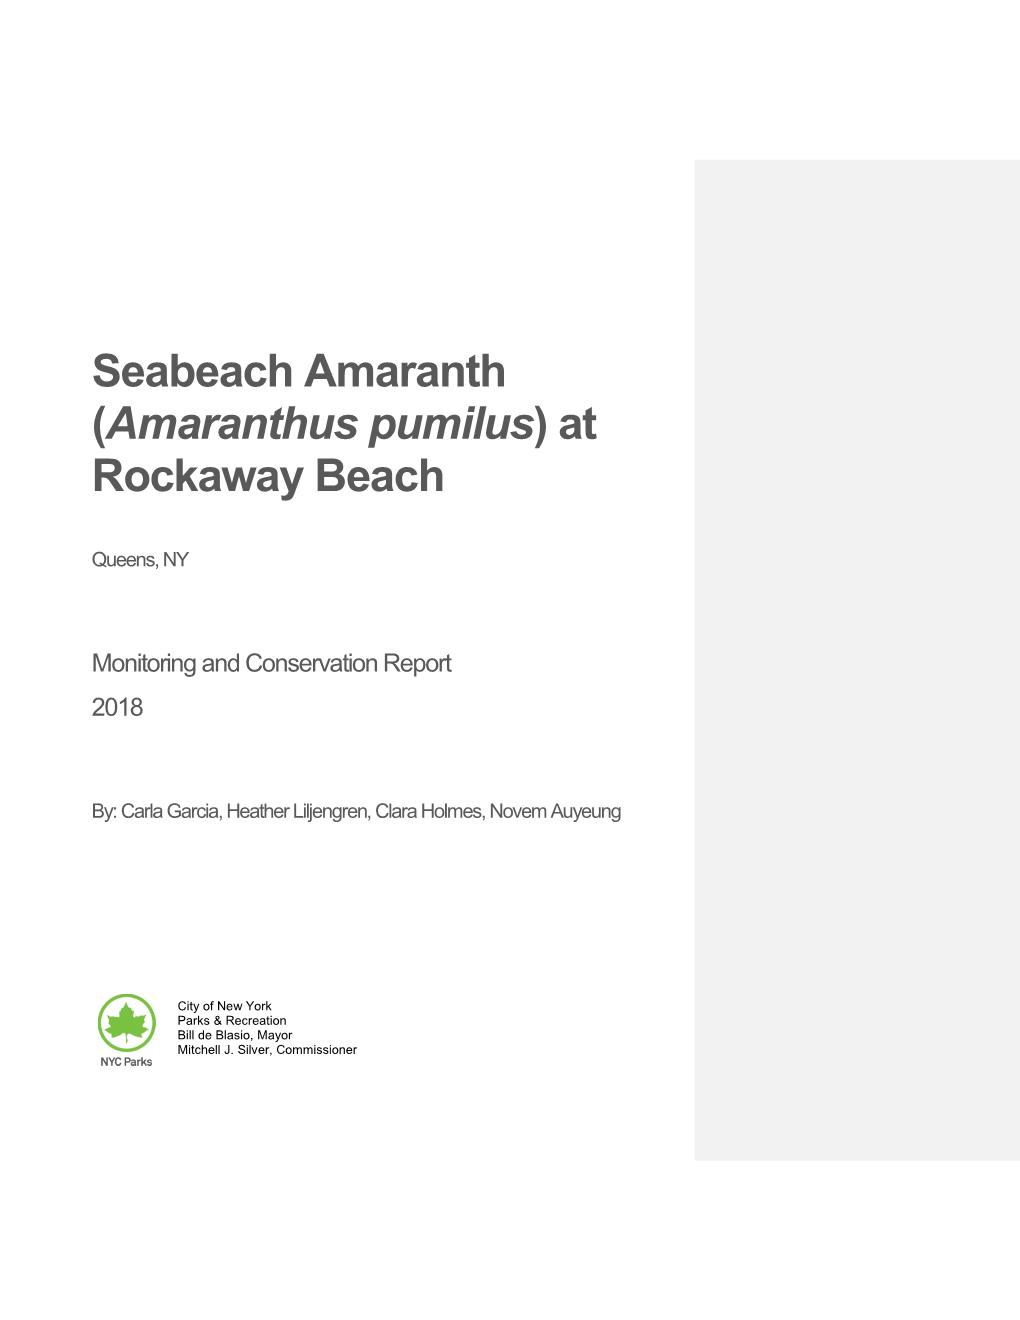 Seabeach Amaranth (Amaranthus Pumilus) at Rockaway Beach